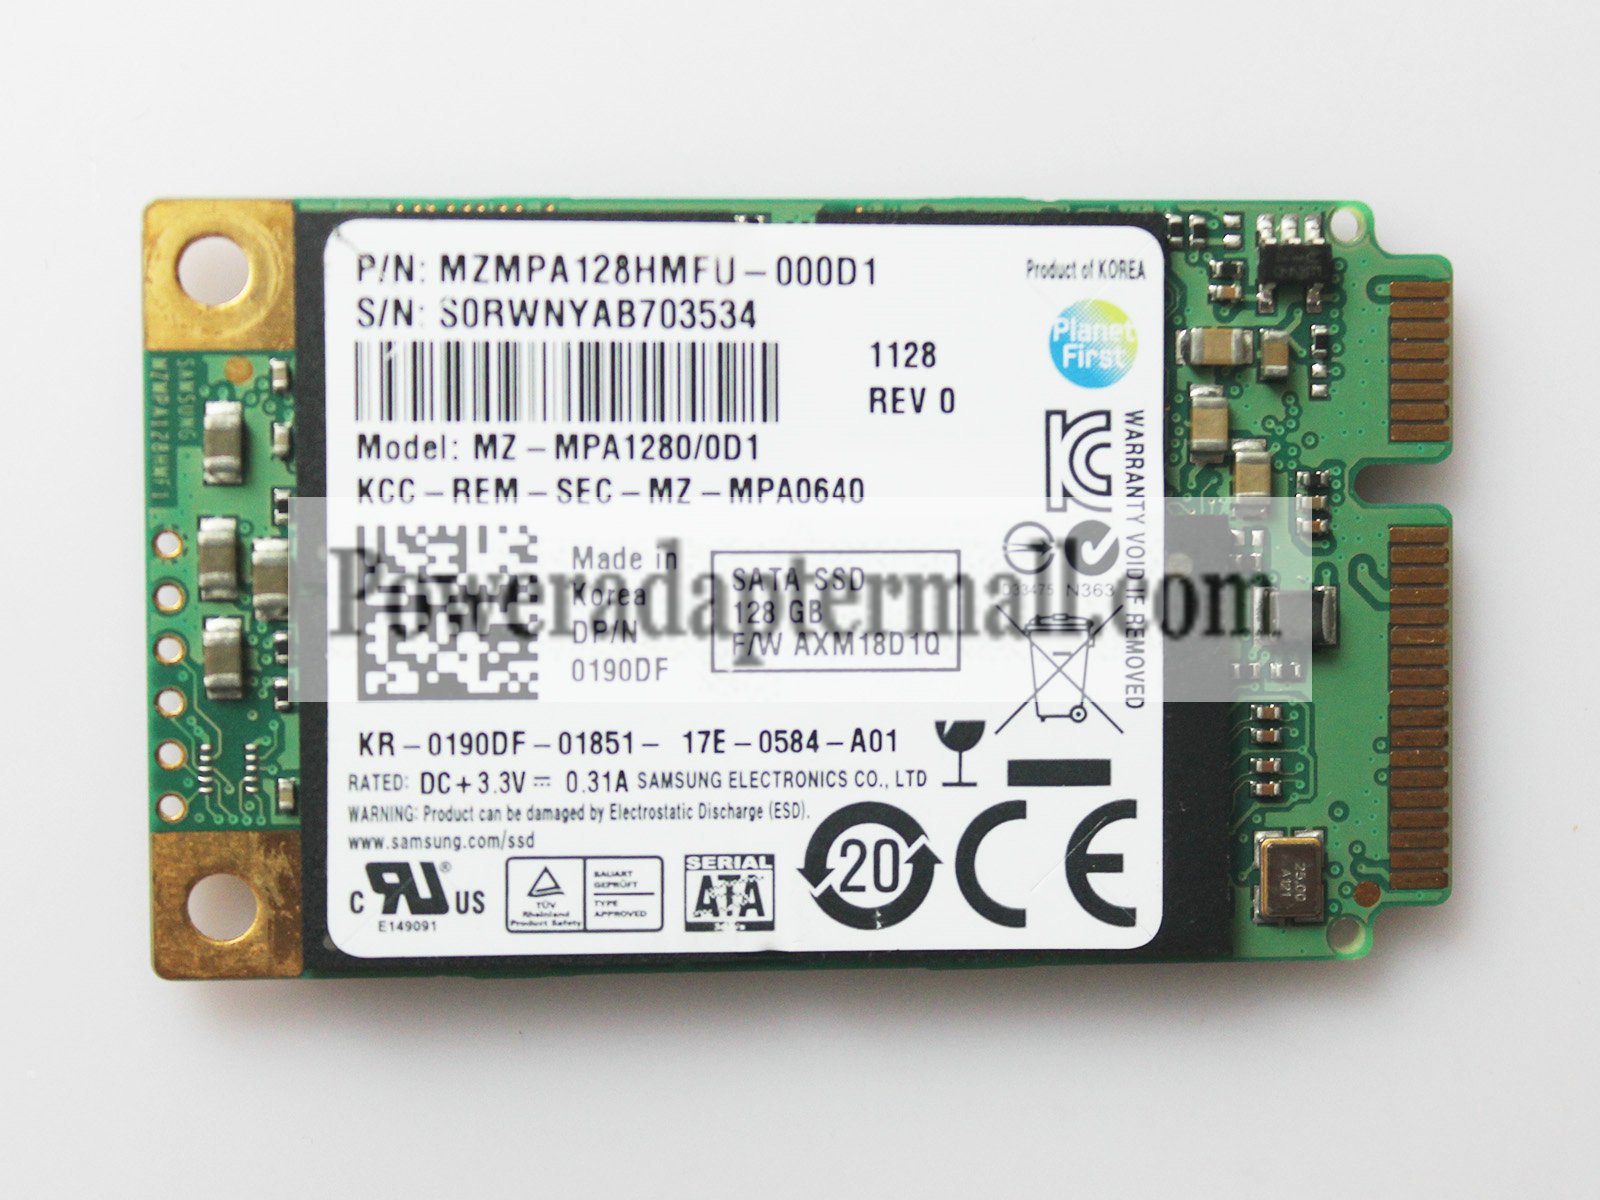 Samsung 128GB SSD MSATA PCI-E HARD DRIVE MZMPA128HMFU-000D1